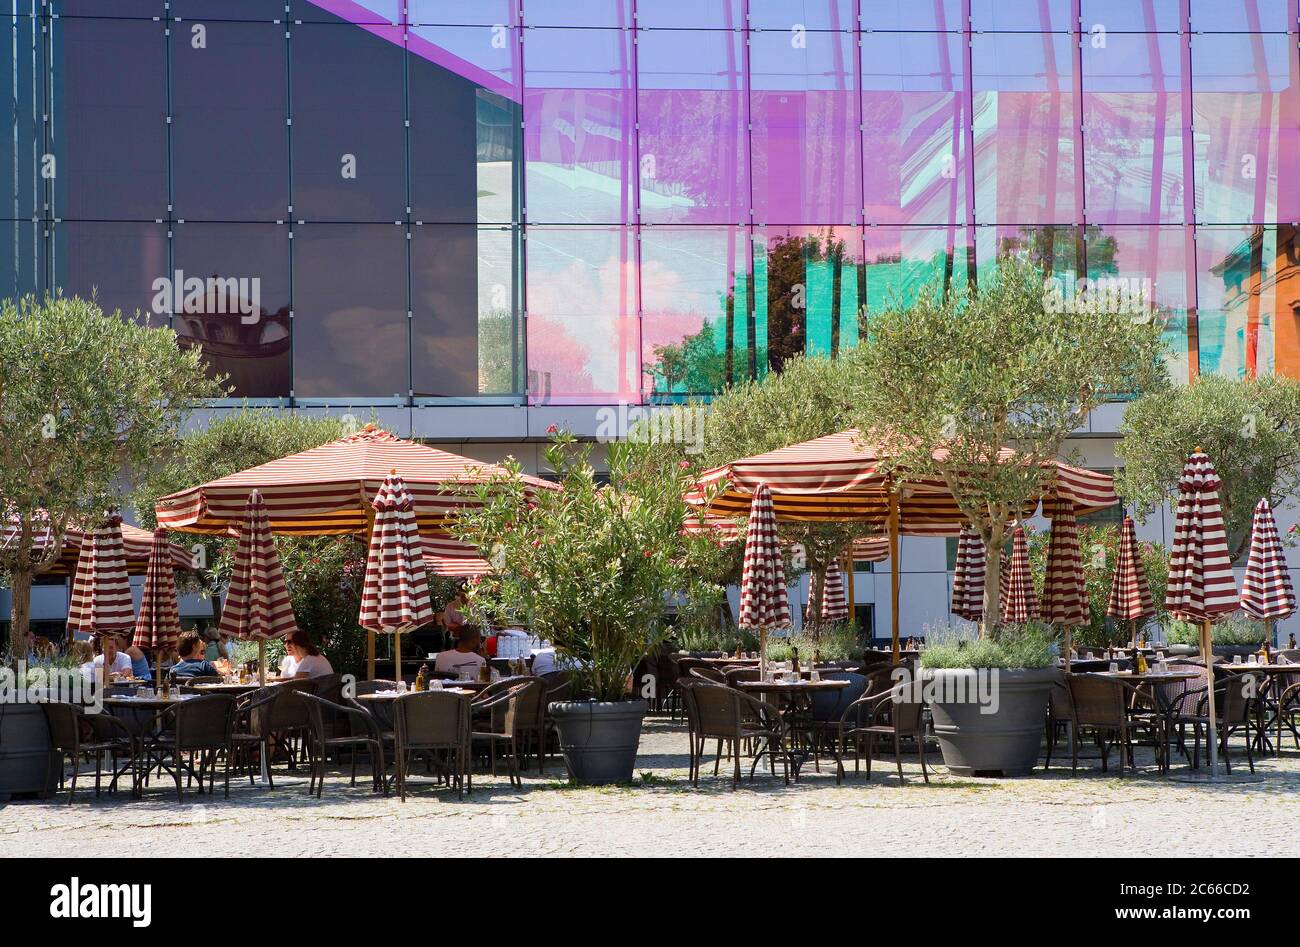 Munich, Café on Marstallplatz Square, near Maximilianstraße, sunshades, olive trees, colourful facade Stock Photo